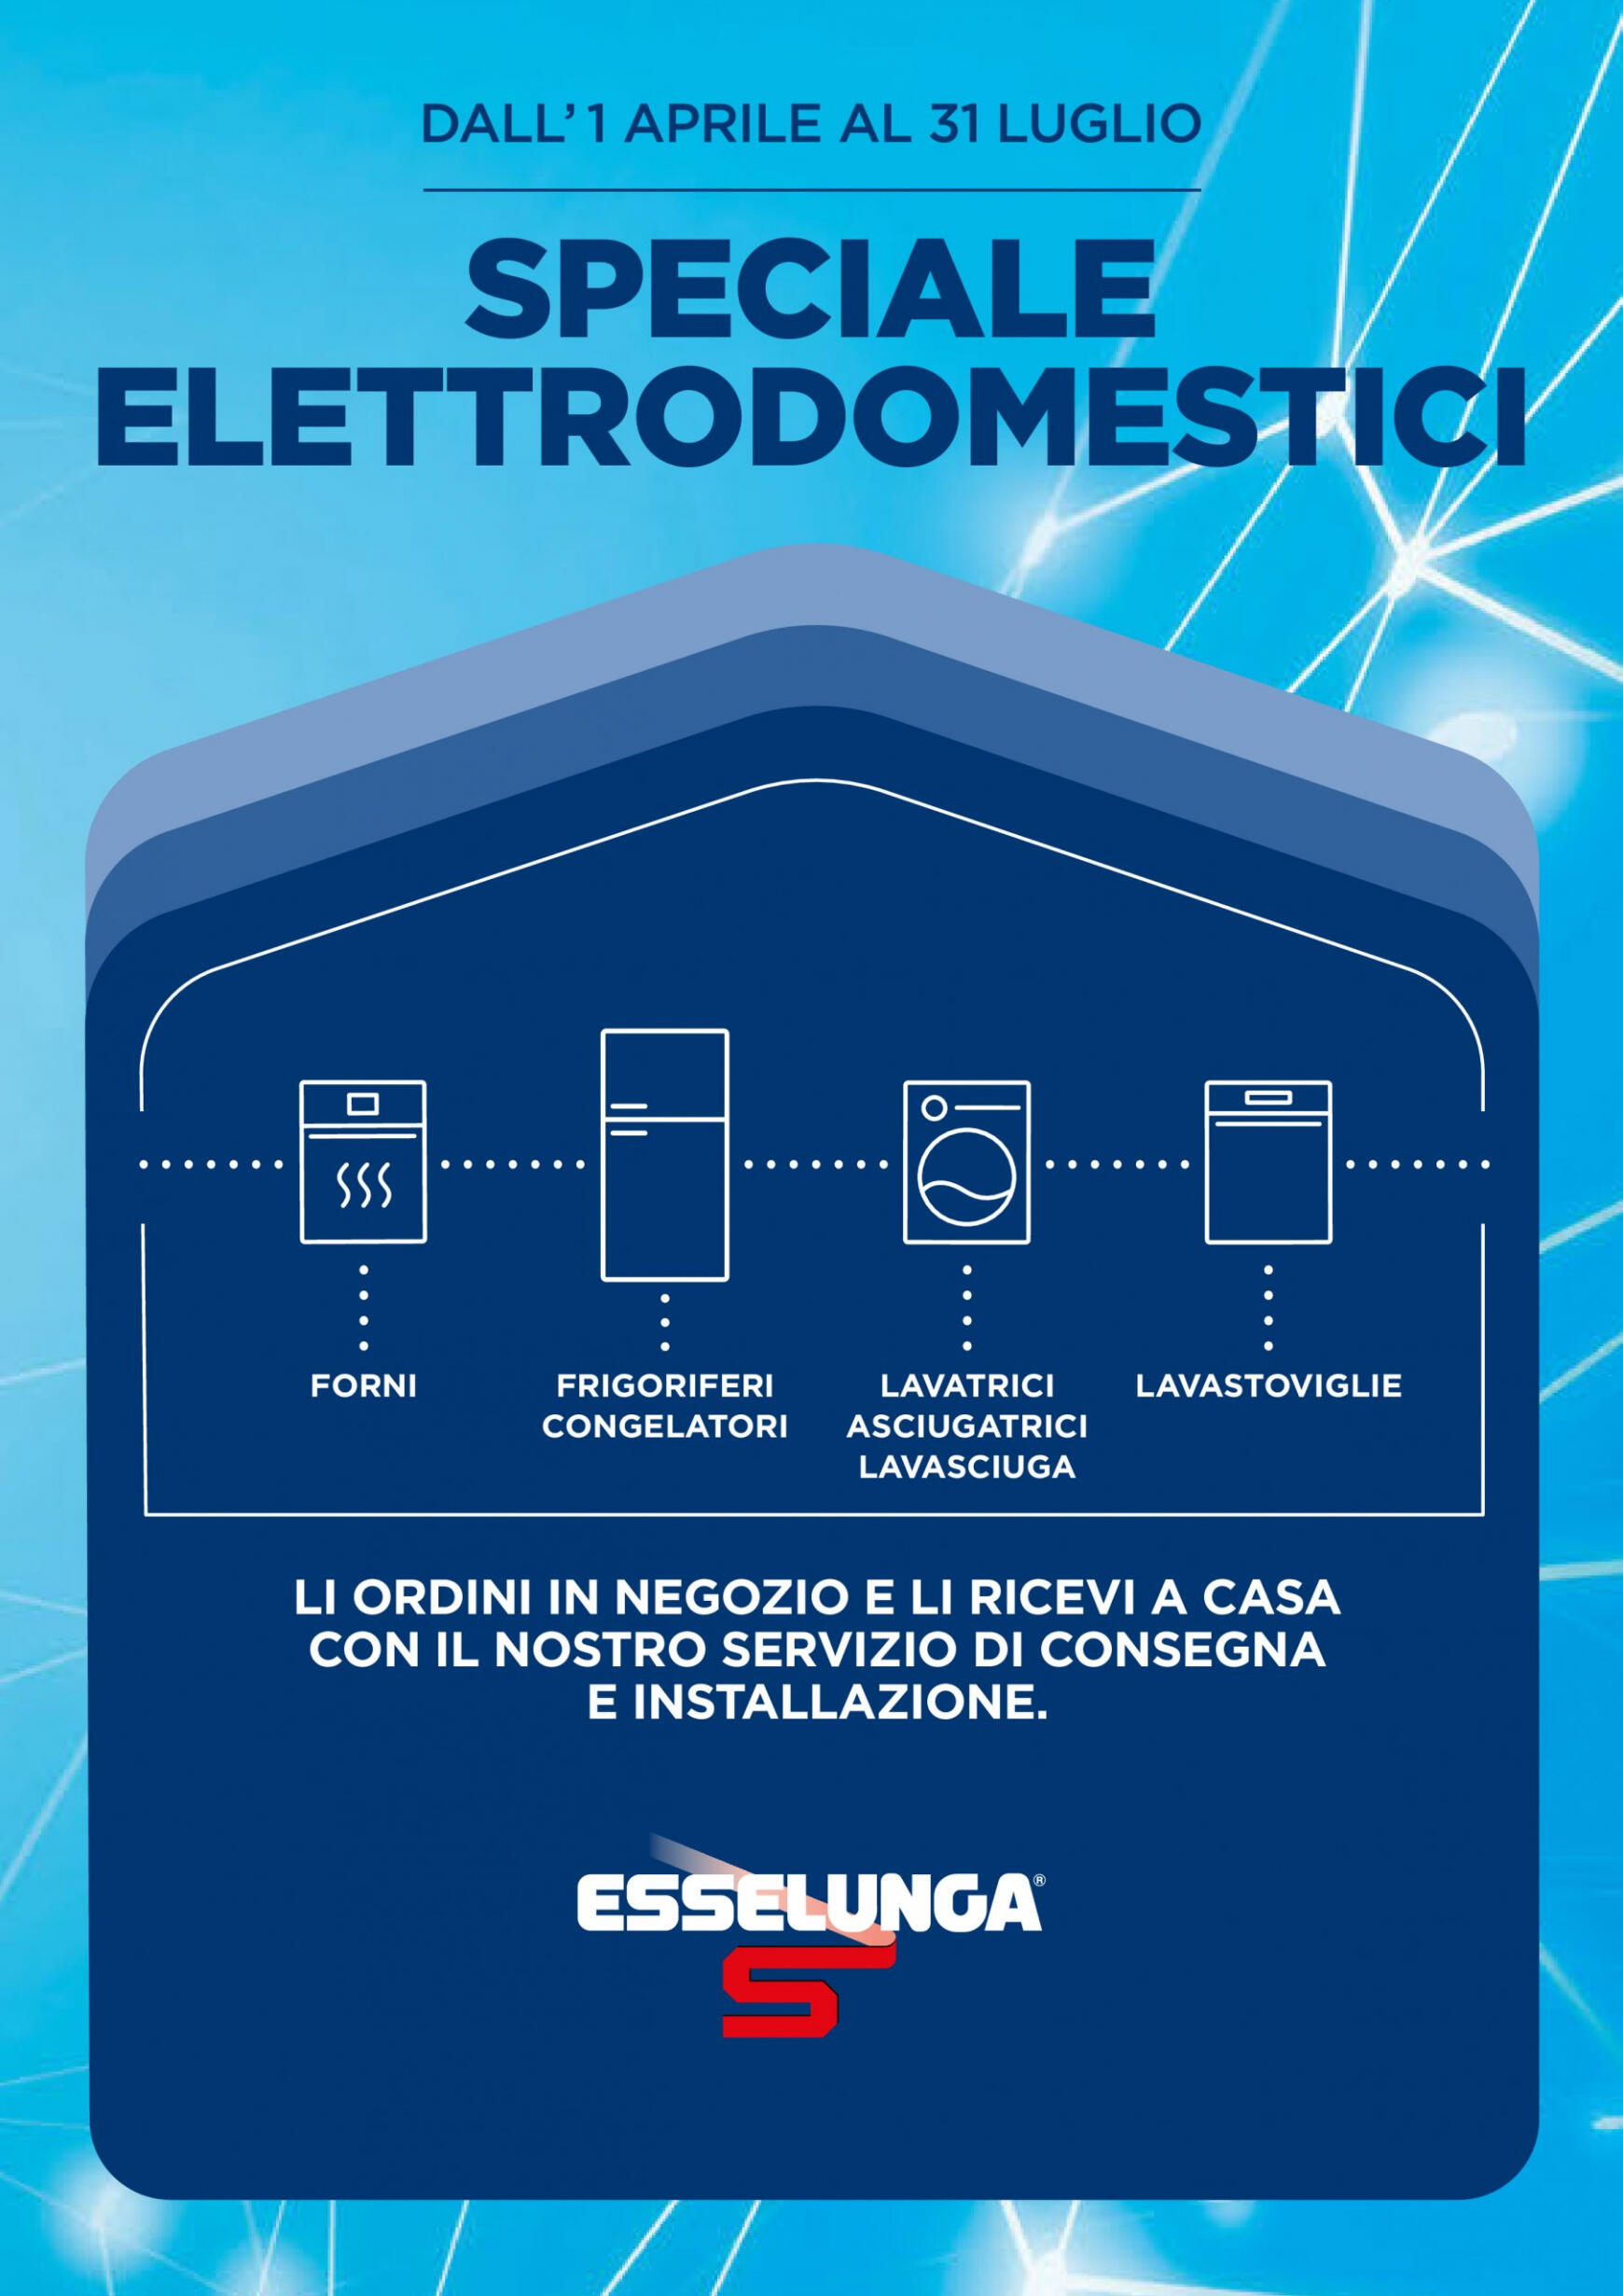 esselunga - Nuovo volantino Esselunga - Speciale Elettrodomestici 01.04. - 31.07.